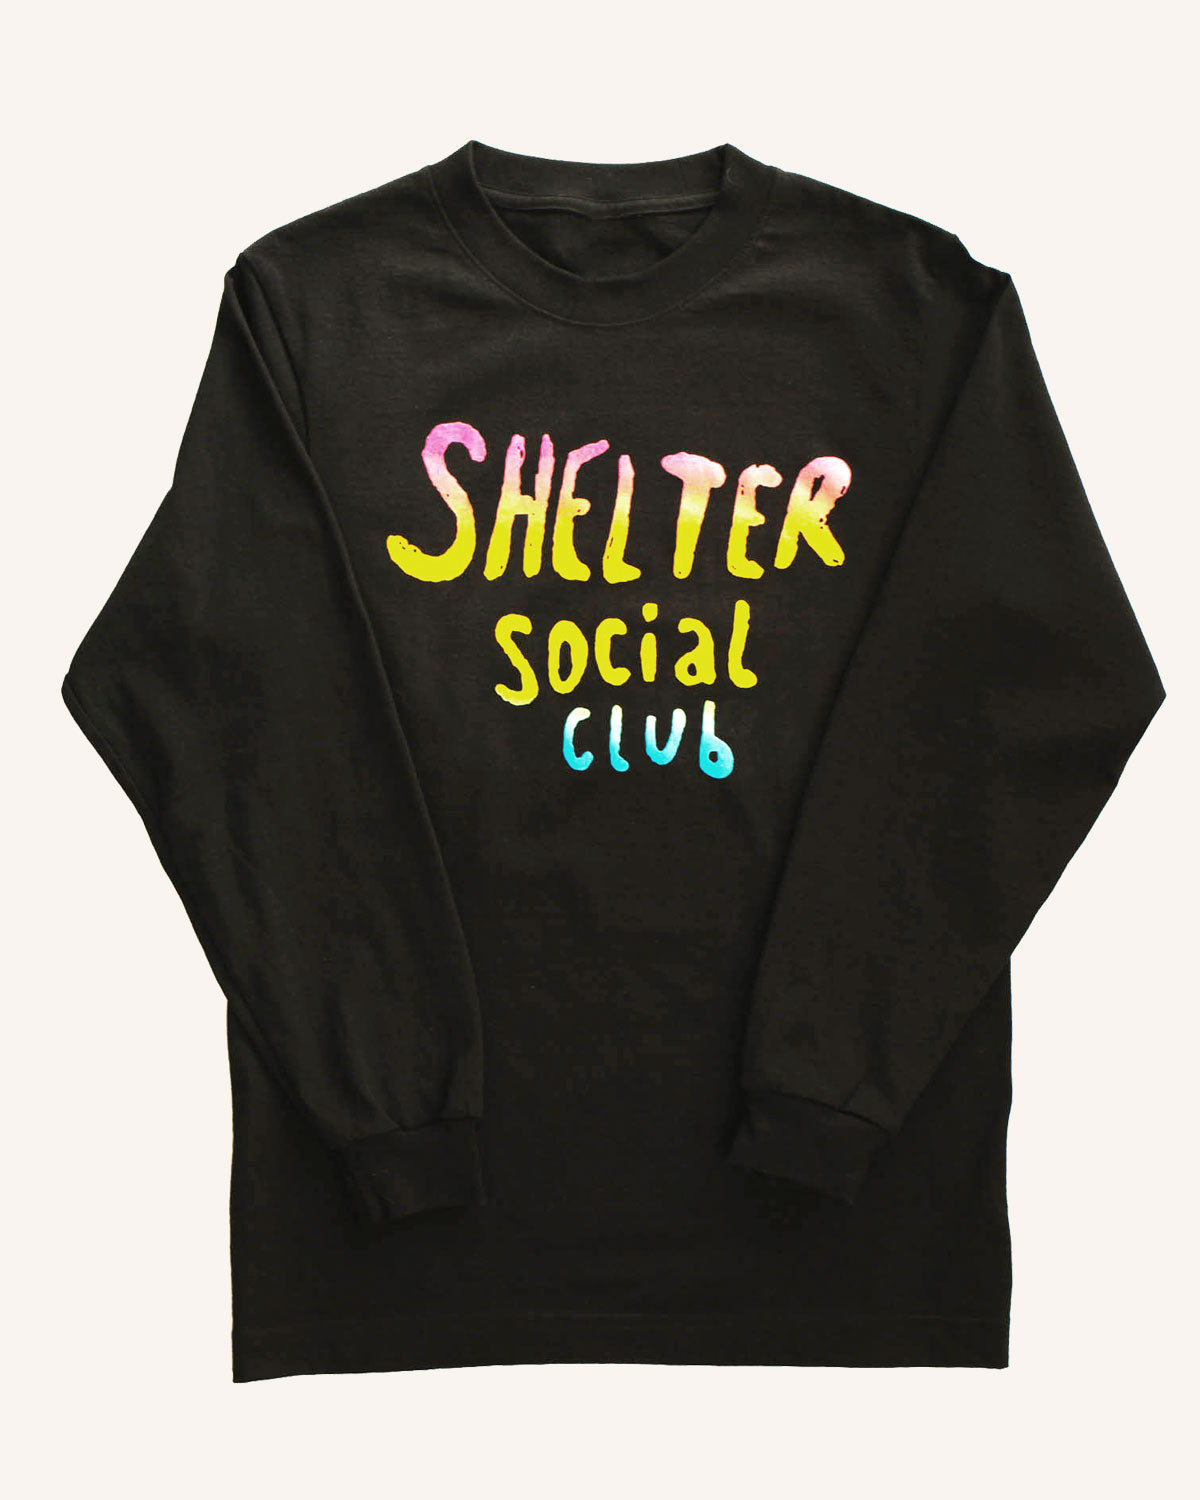 Shelter Social Club L/S Tee - Shelter Social Club